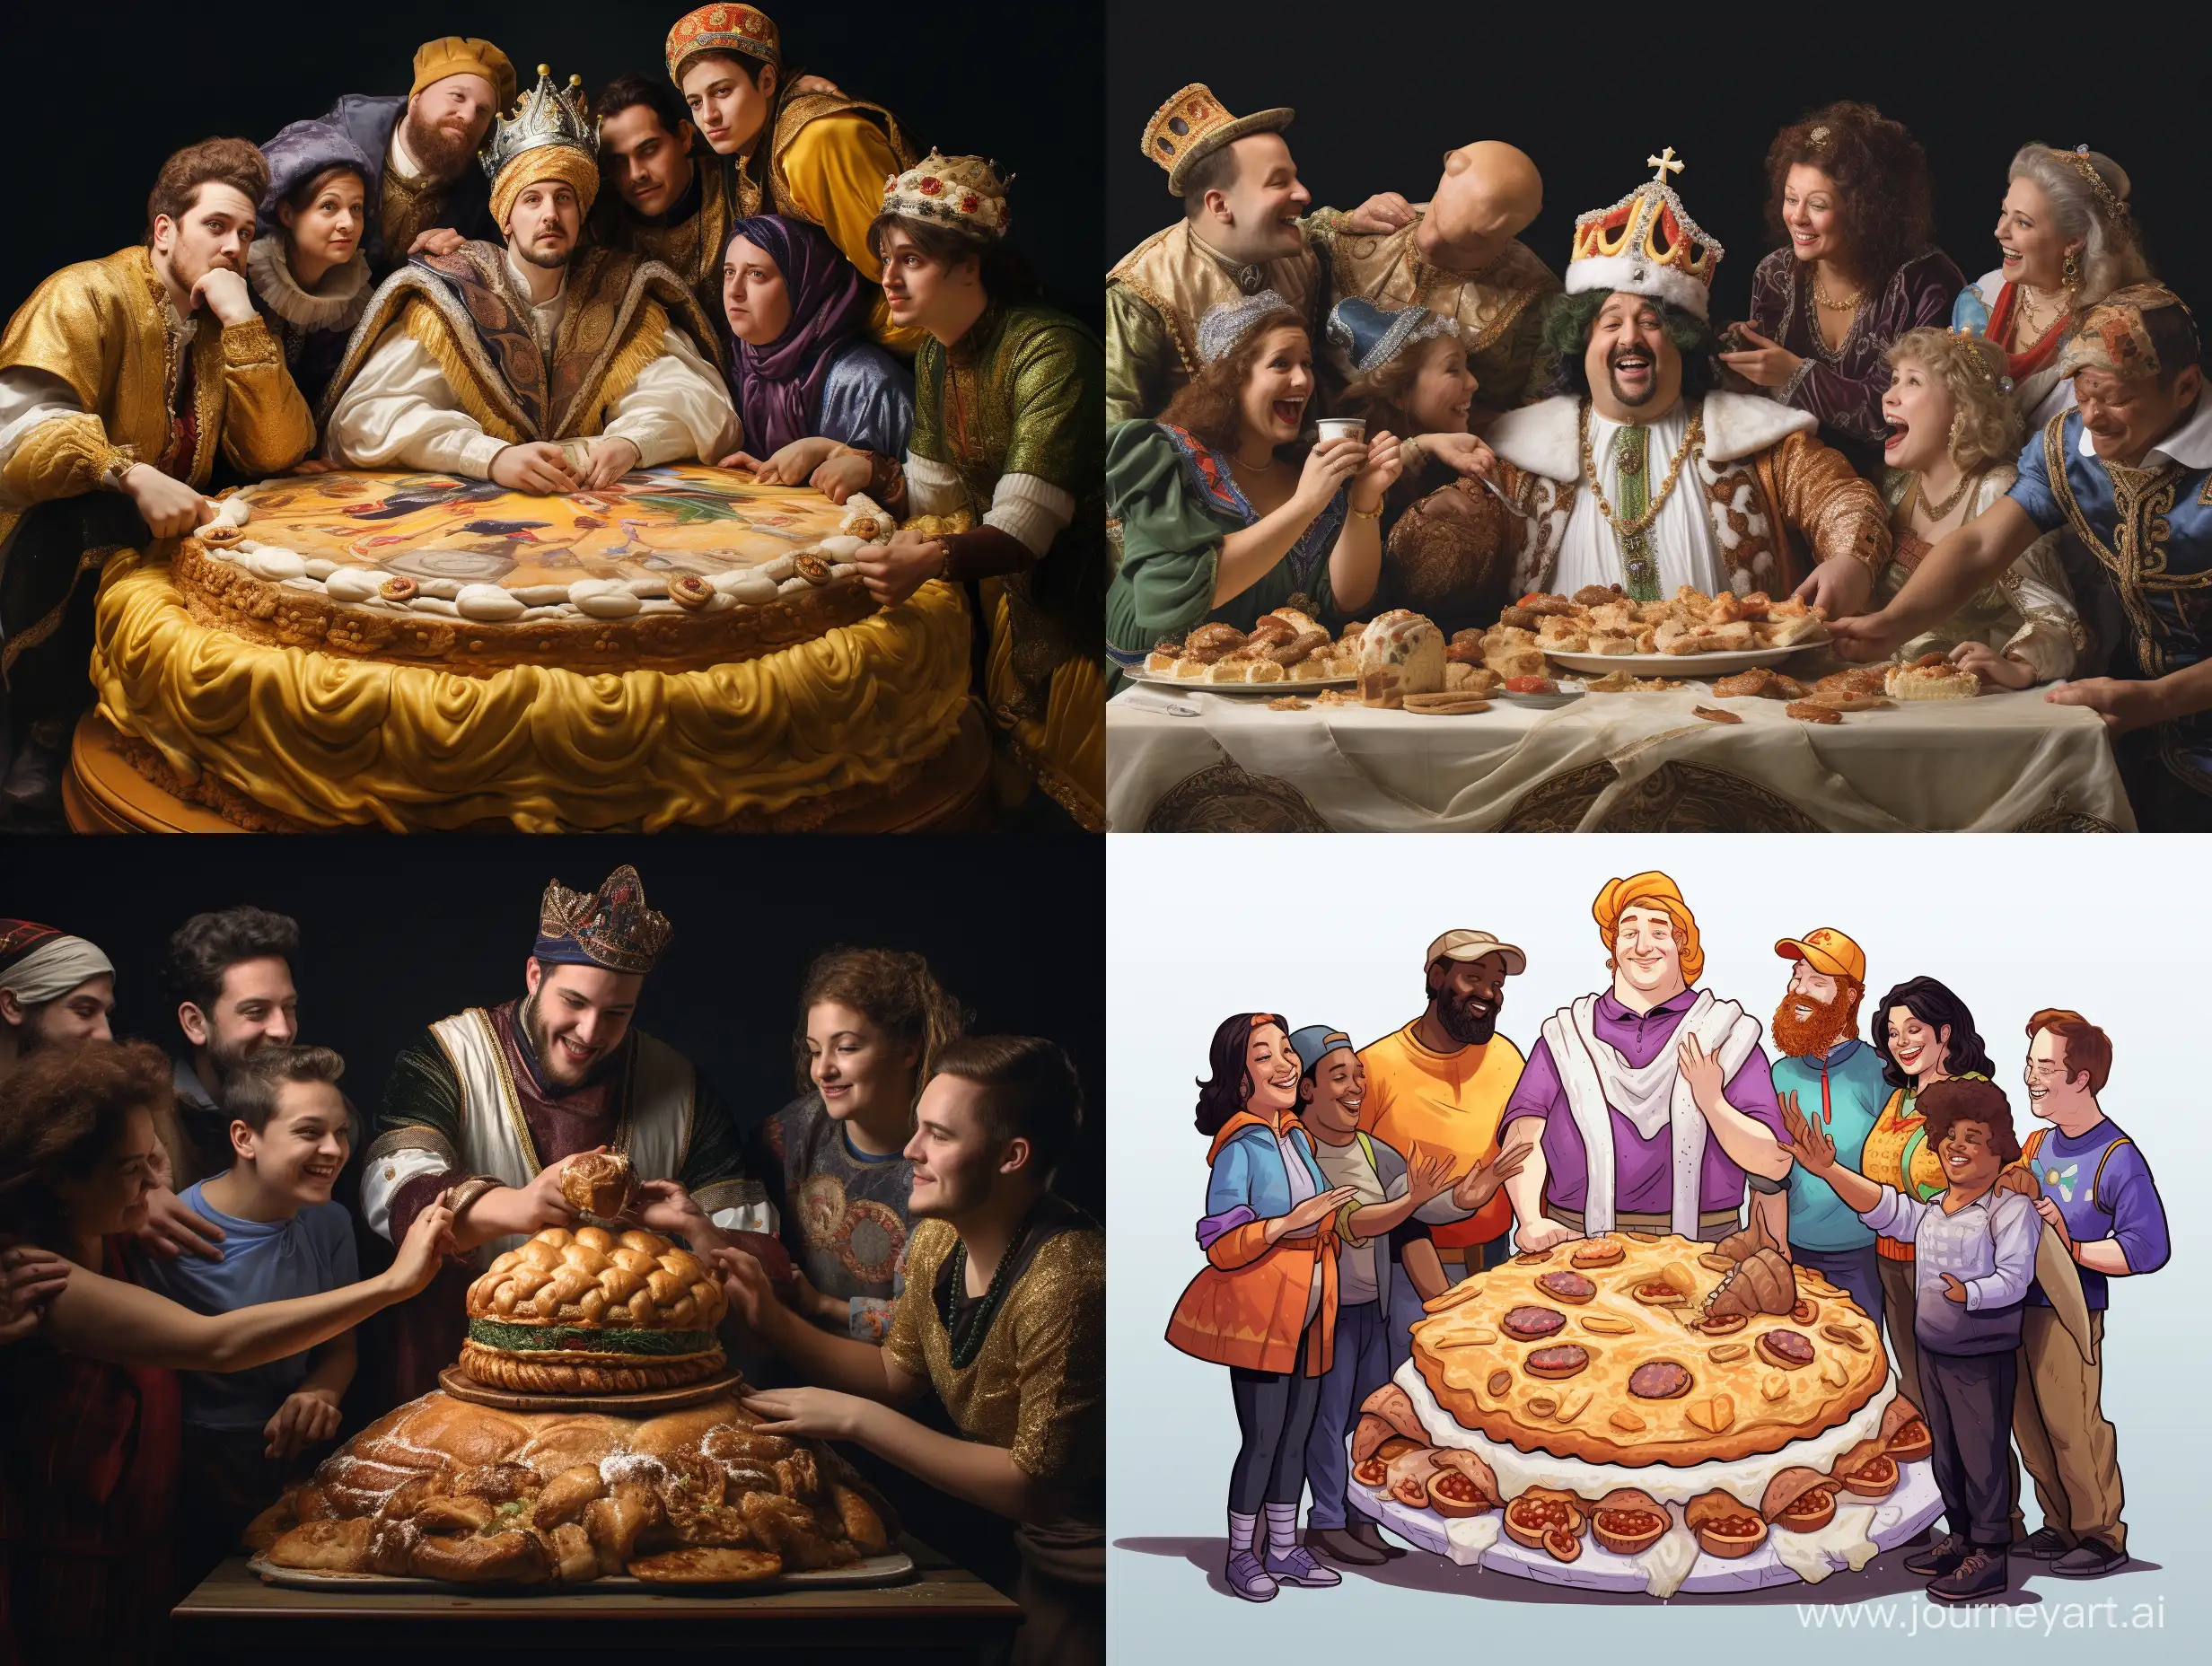 Joyful-Celebration-with-a-King-Cake-Vibrant-Group-Gathering